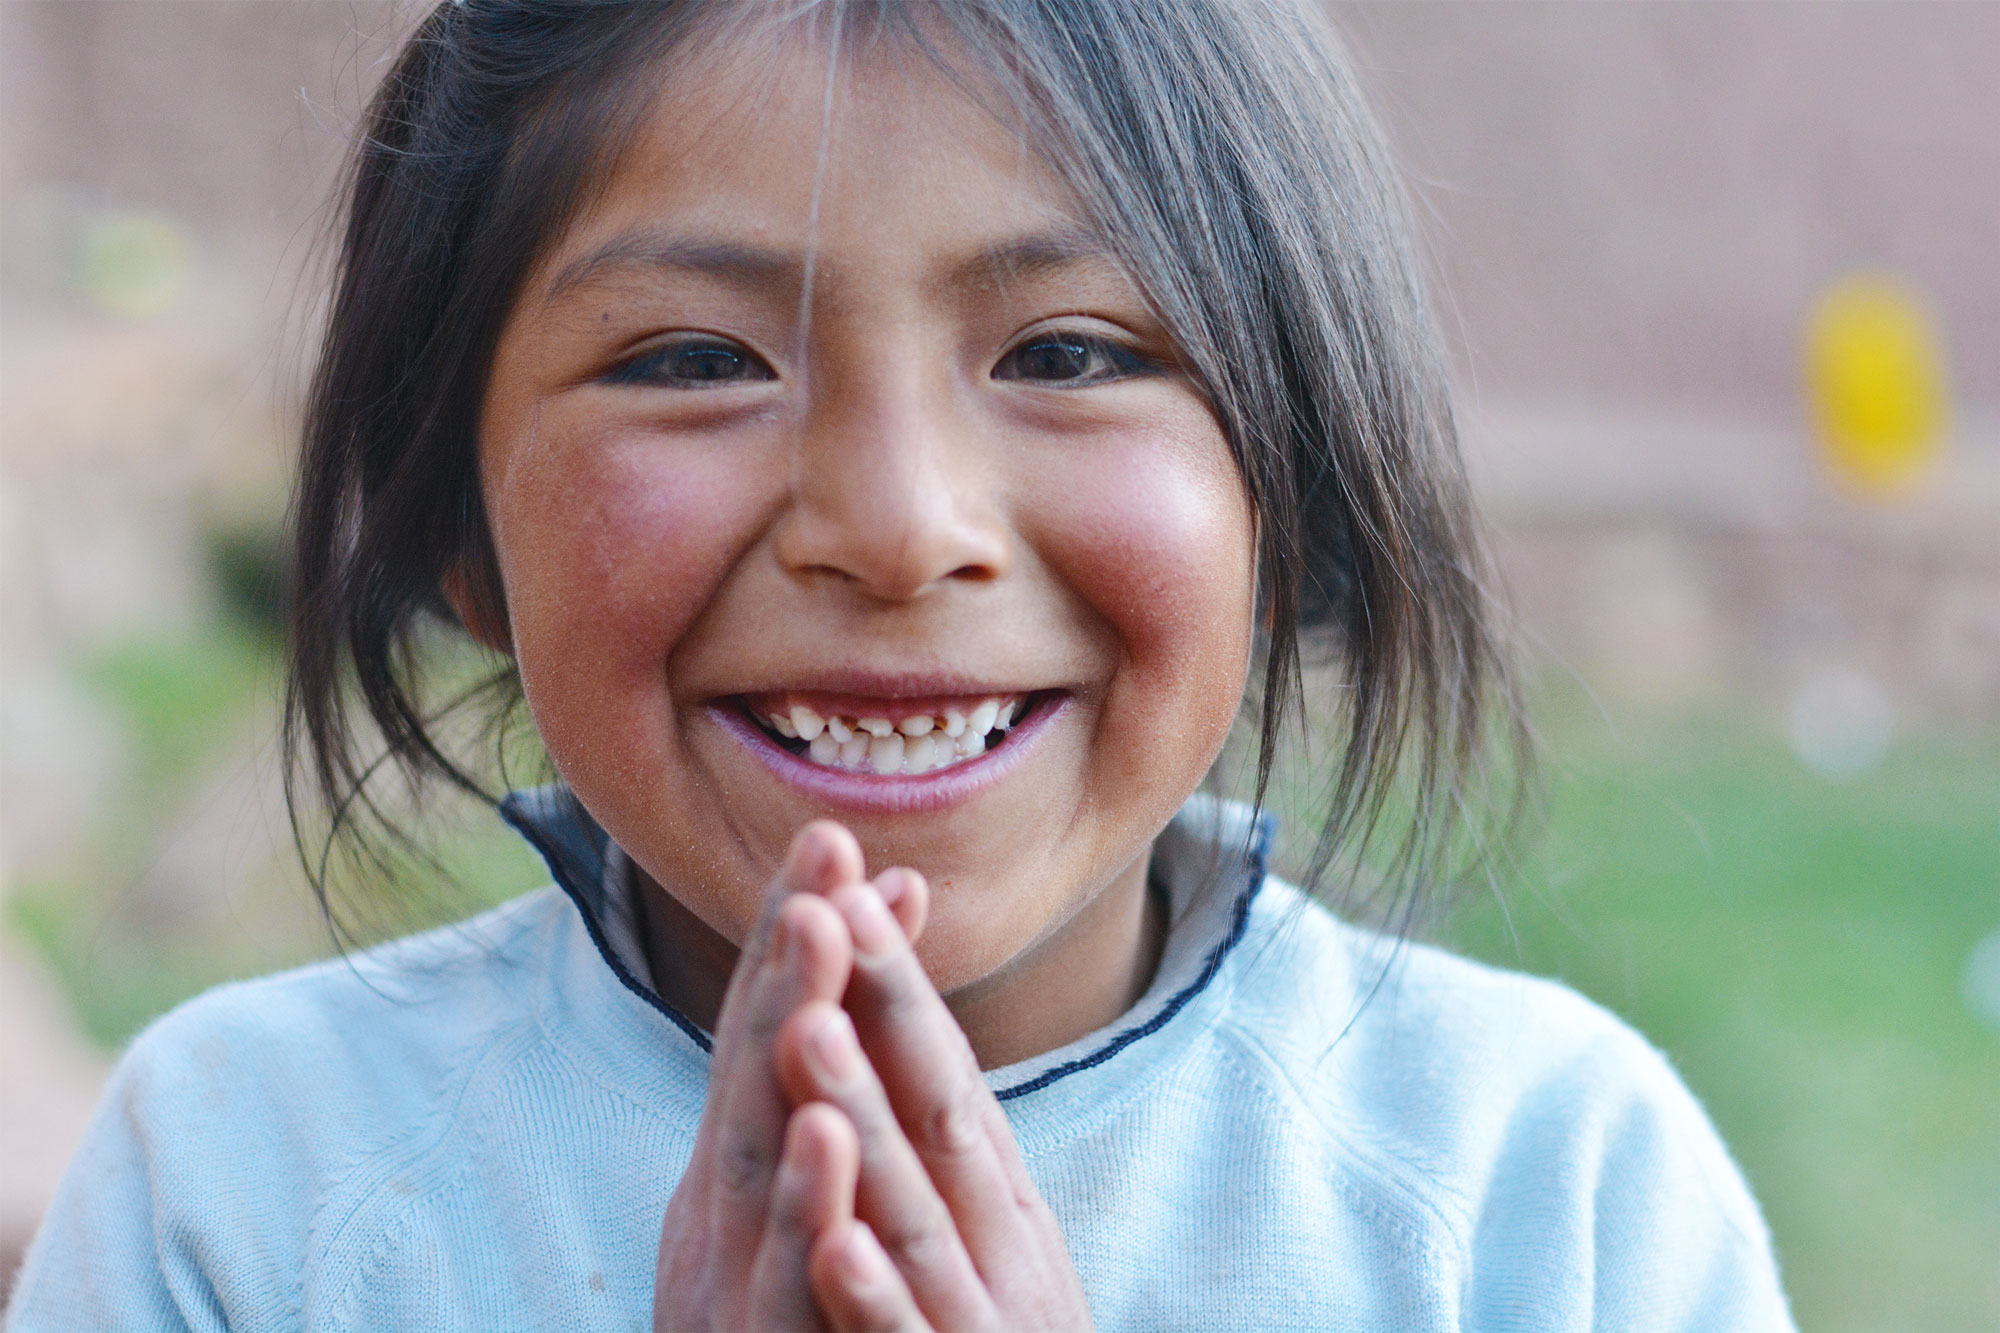 Native American girl smiling